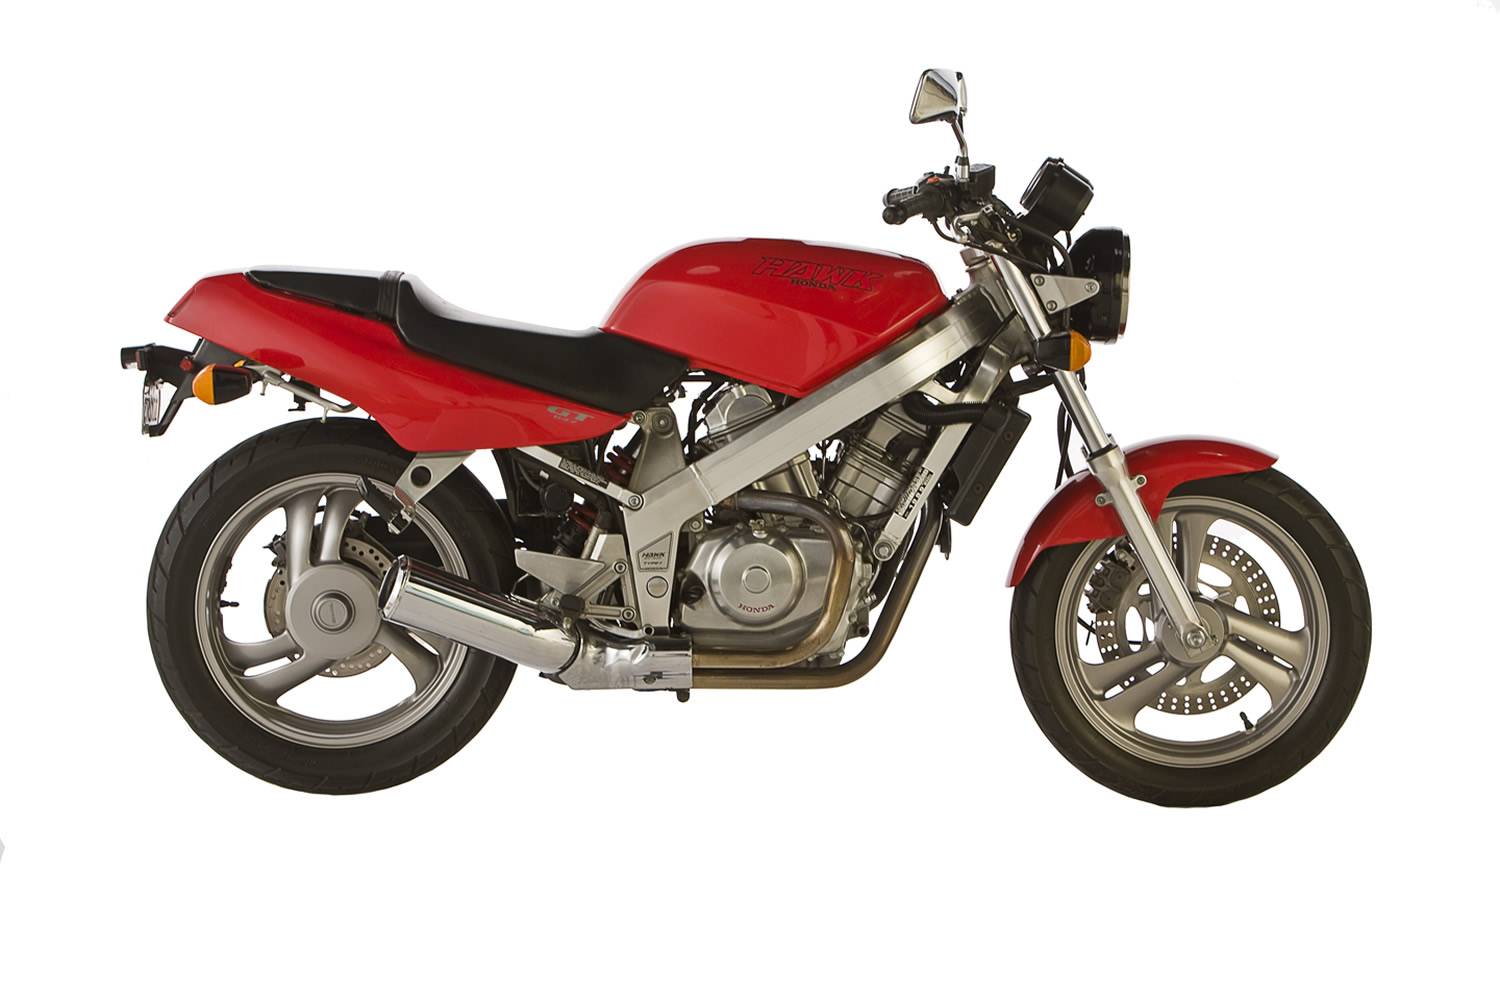 Обзор байка хонда nt 650v deauville: технические характеристики мотоцикла | ⚡chtocar